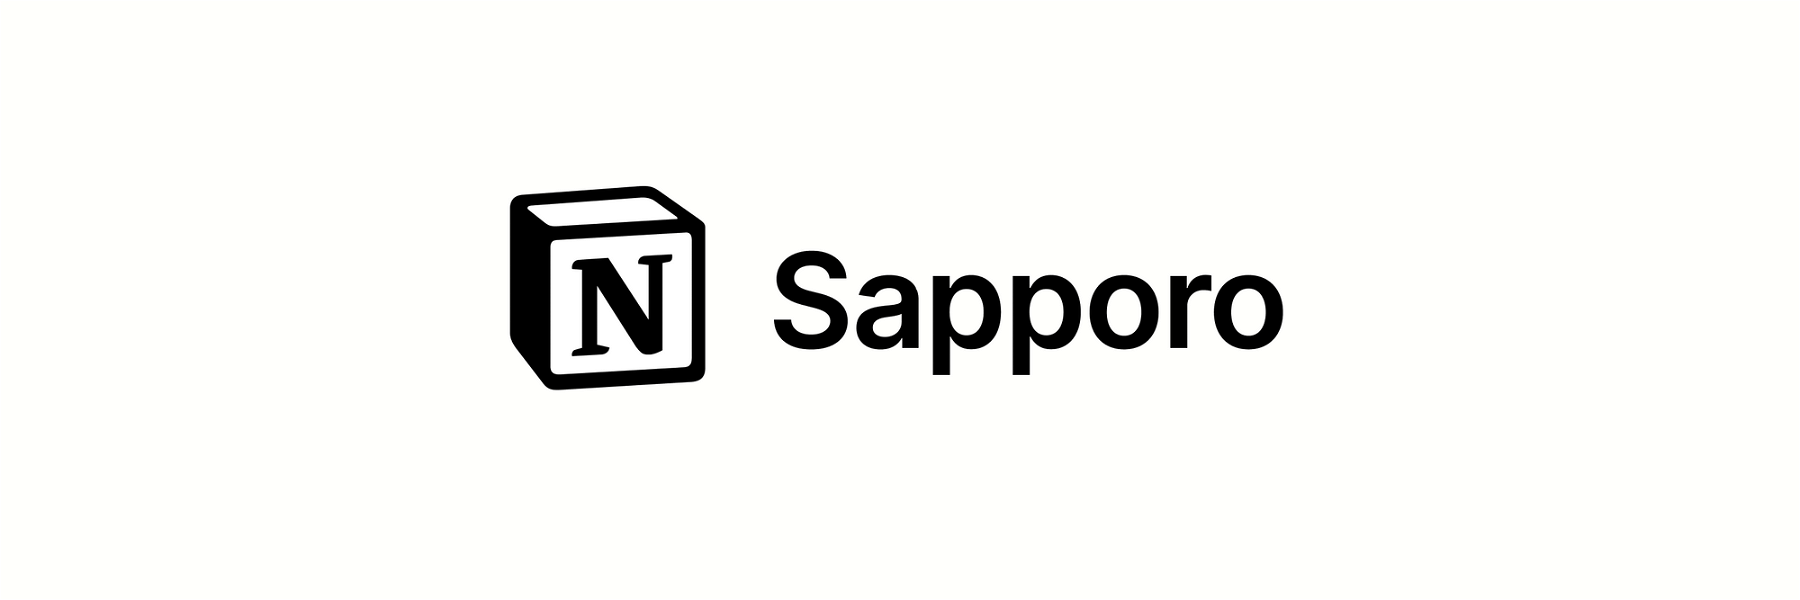 Notion Sapporo